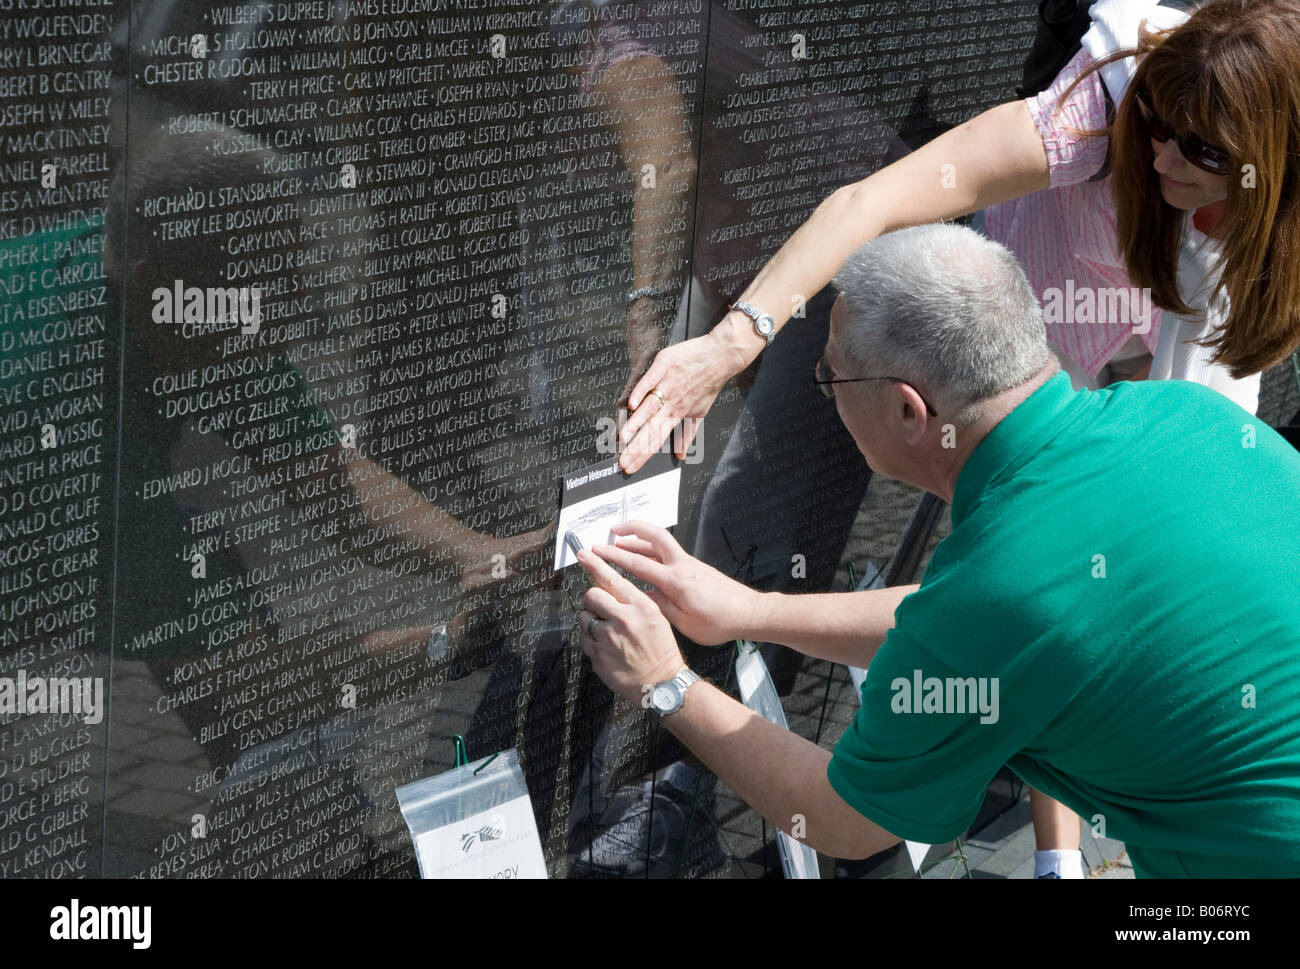 Vietnam Veterans Memorial Wall in Washington, DC Stockfoto